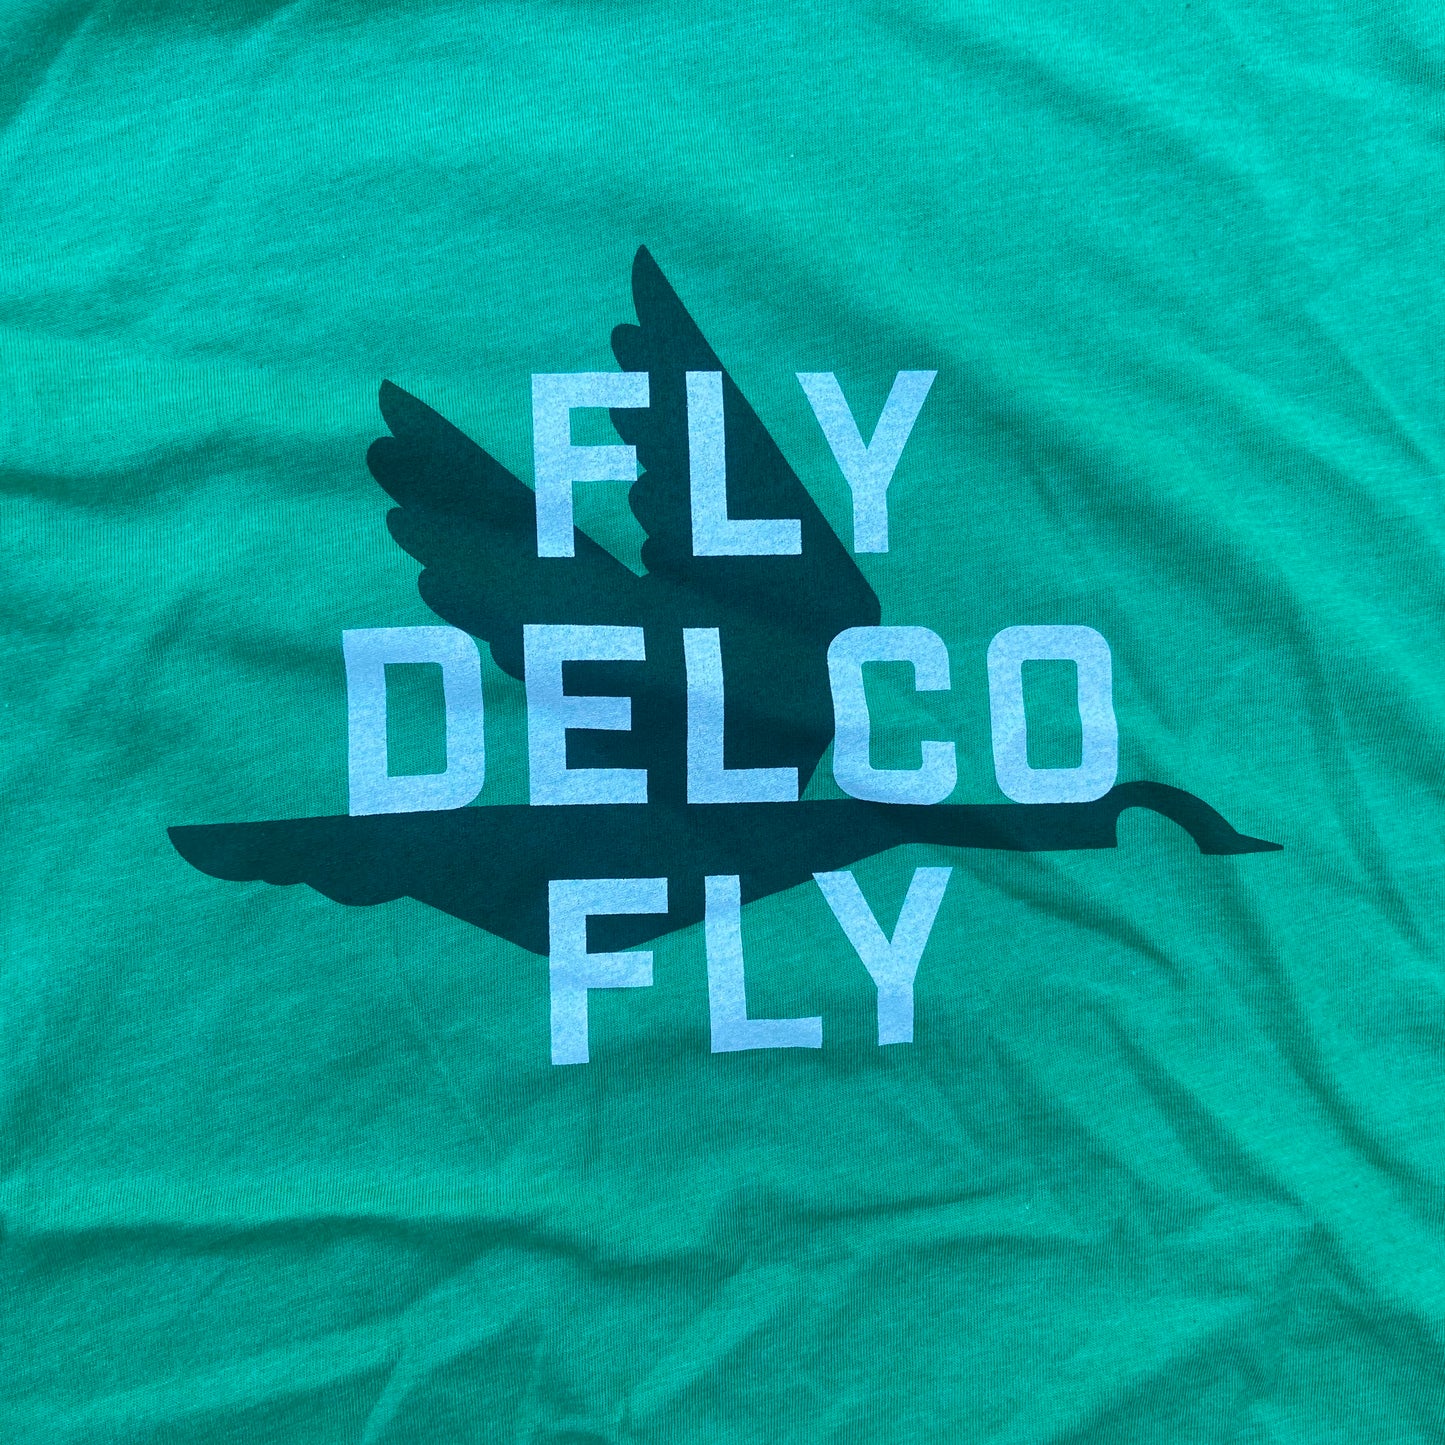 Fly DELCO Fly (Grey)